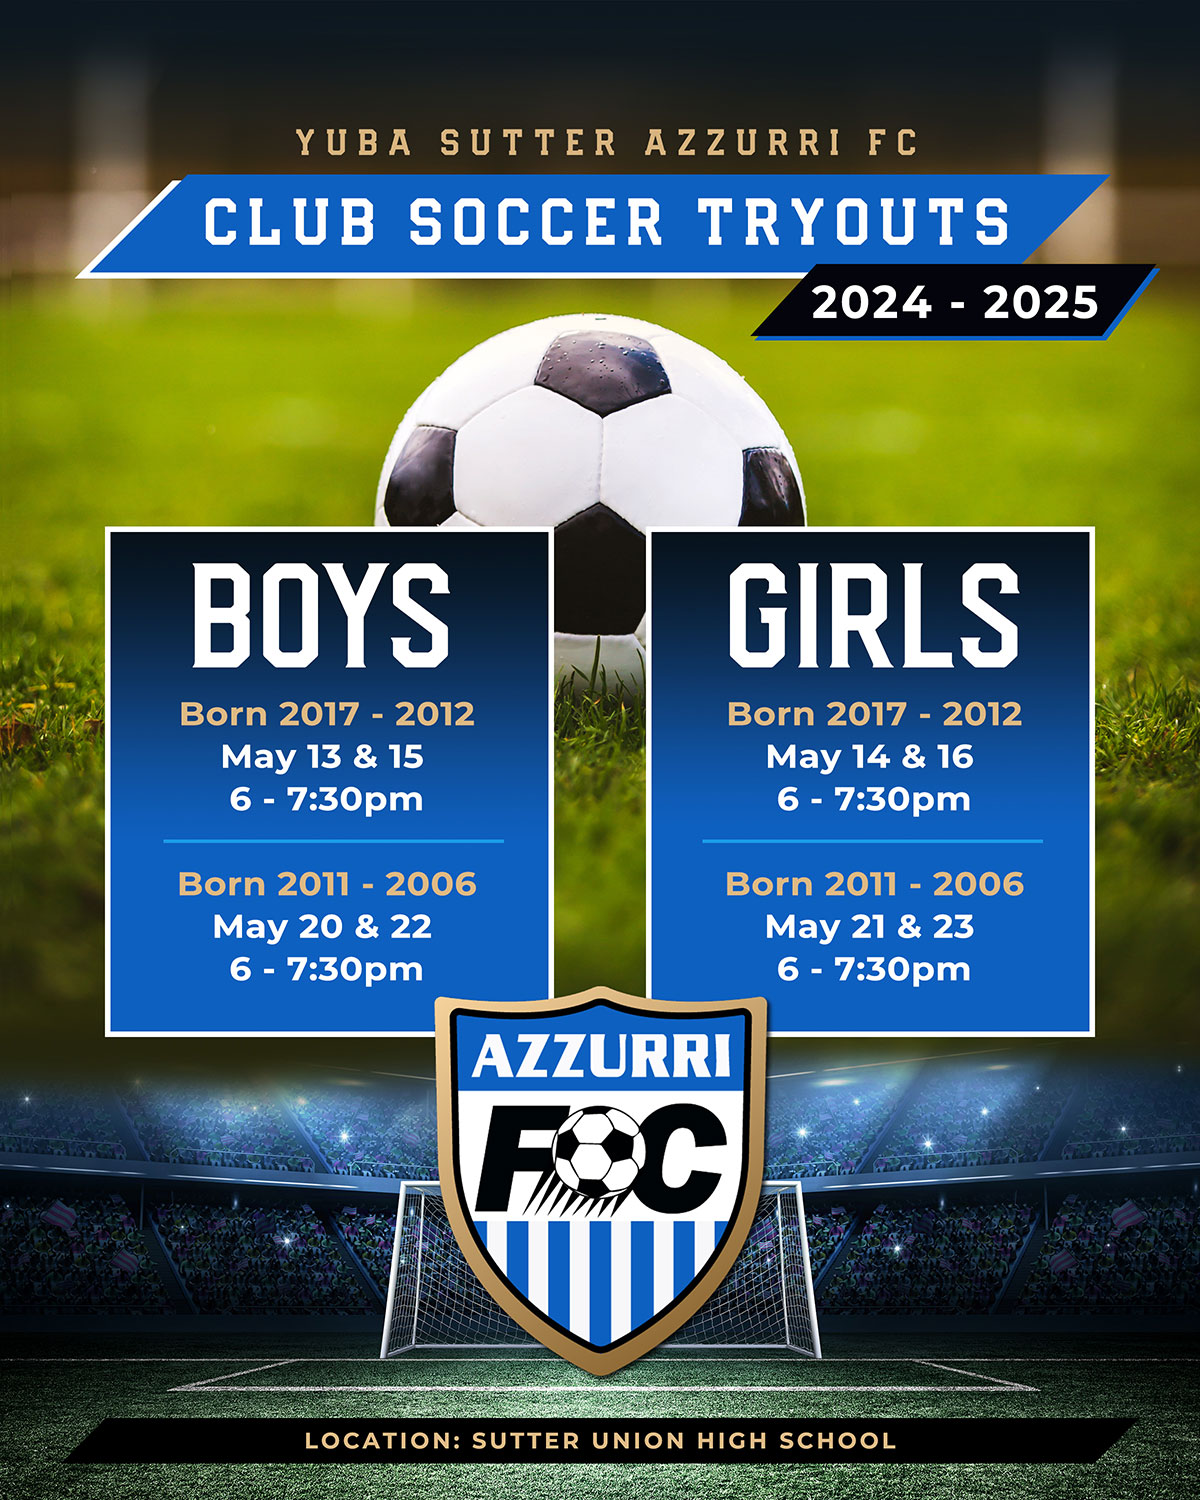 Azzurri FC Yuba City Tryouts 2024